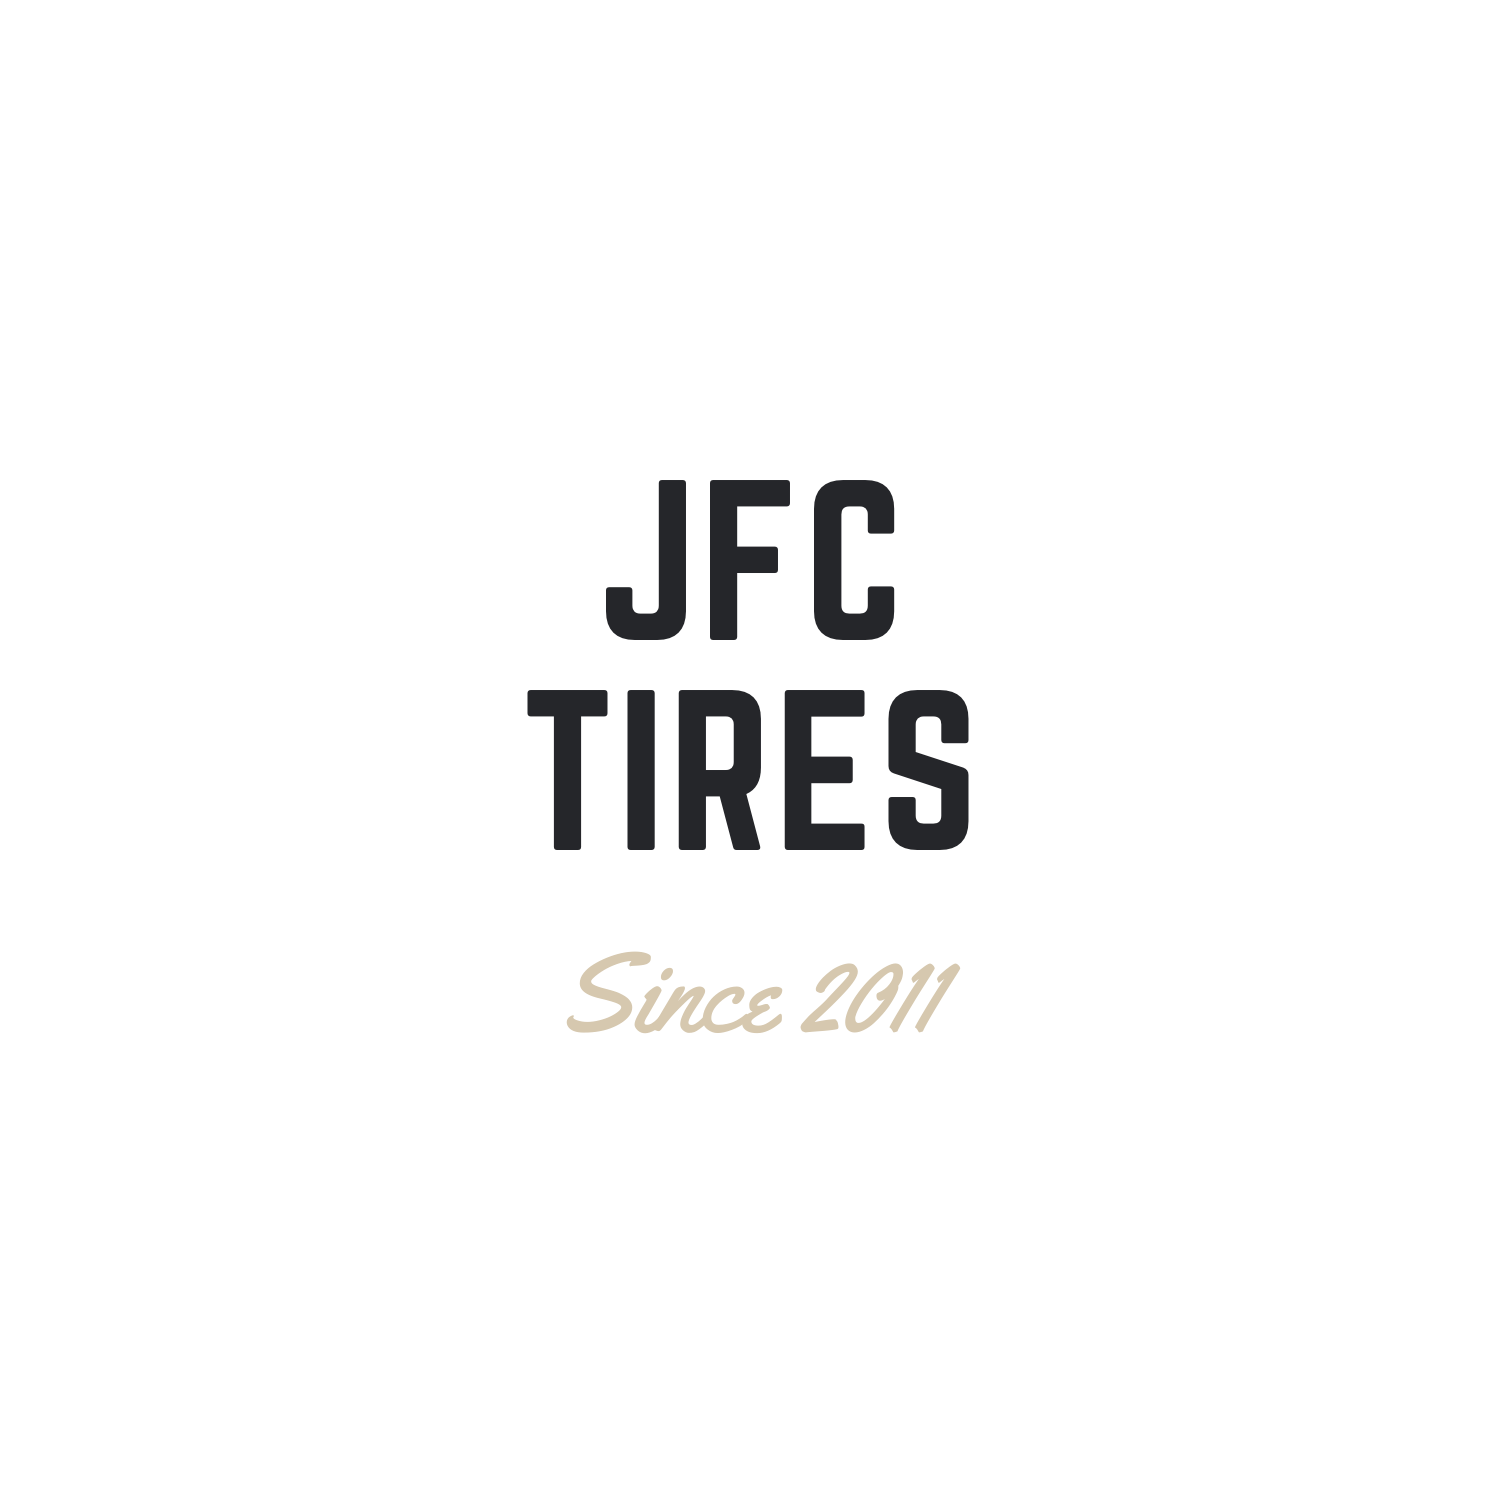 jfc tires